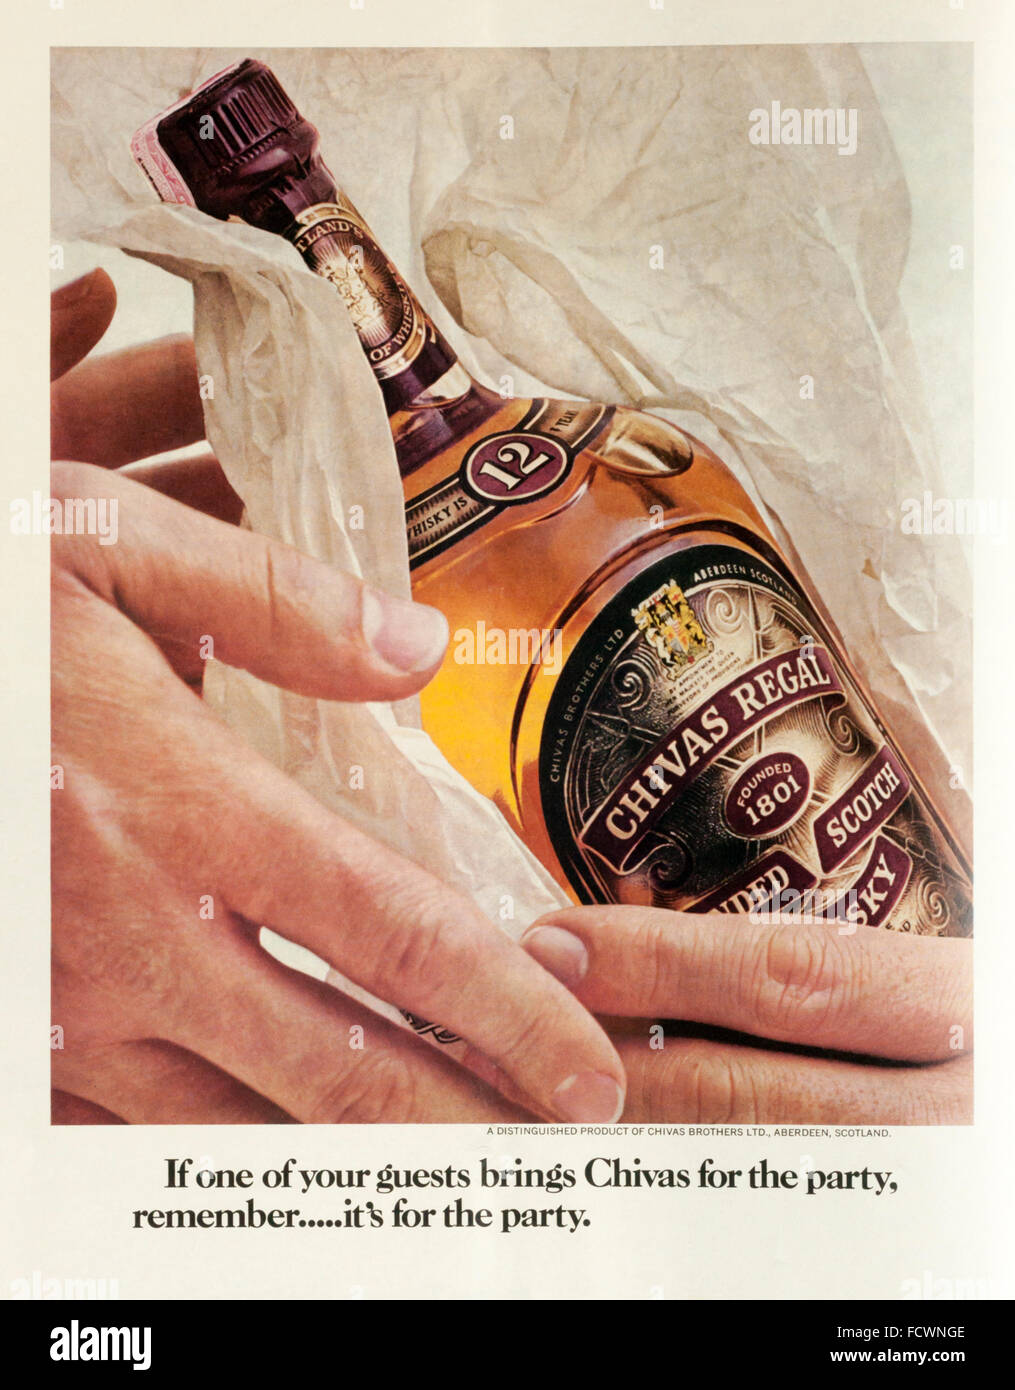 1970s magazine advertisement advertising Chivas Regal Scotch Whisky. Stock Photo